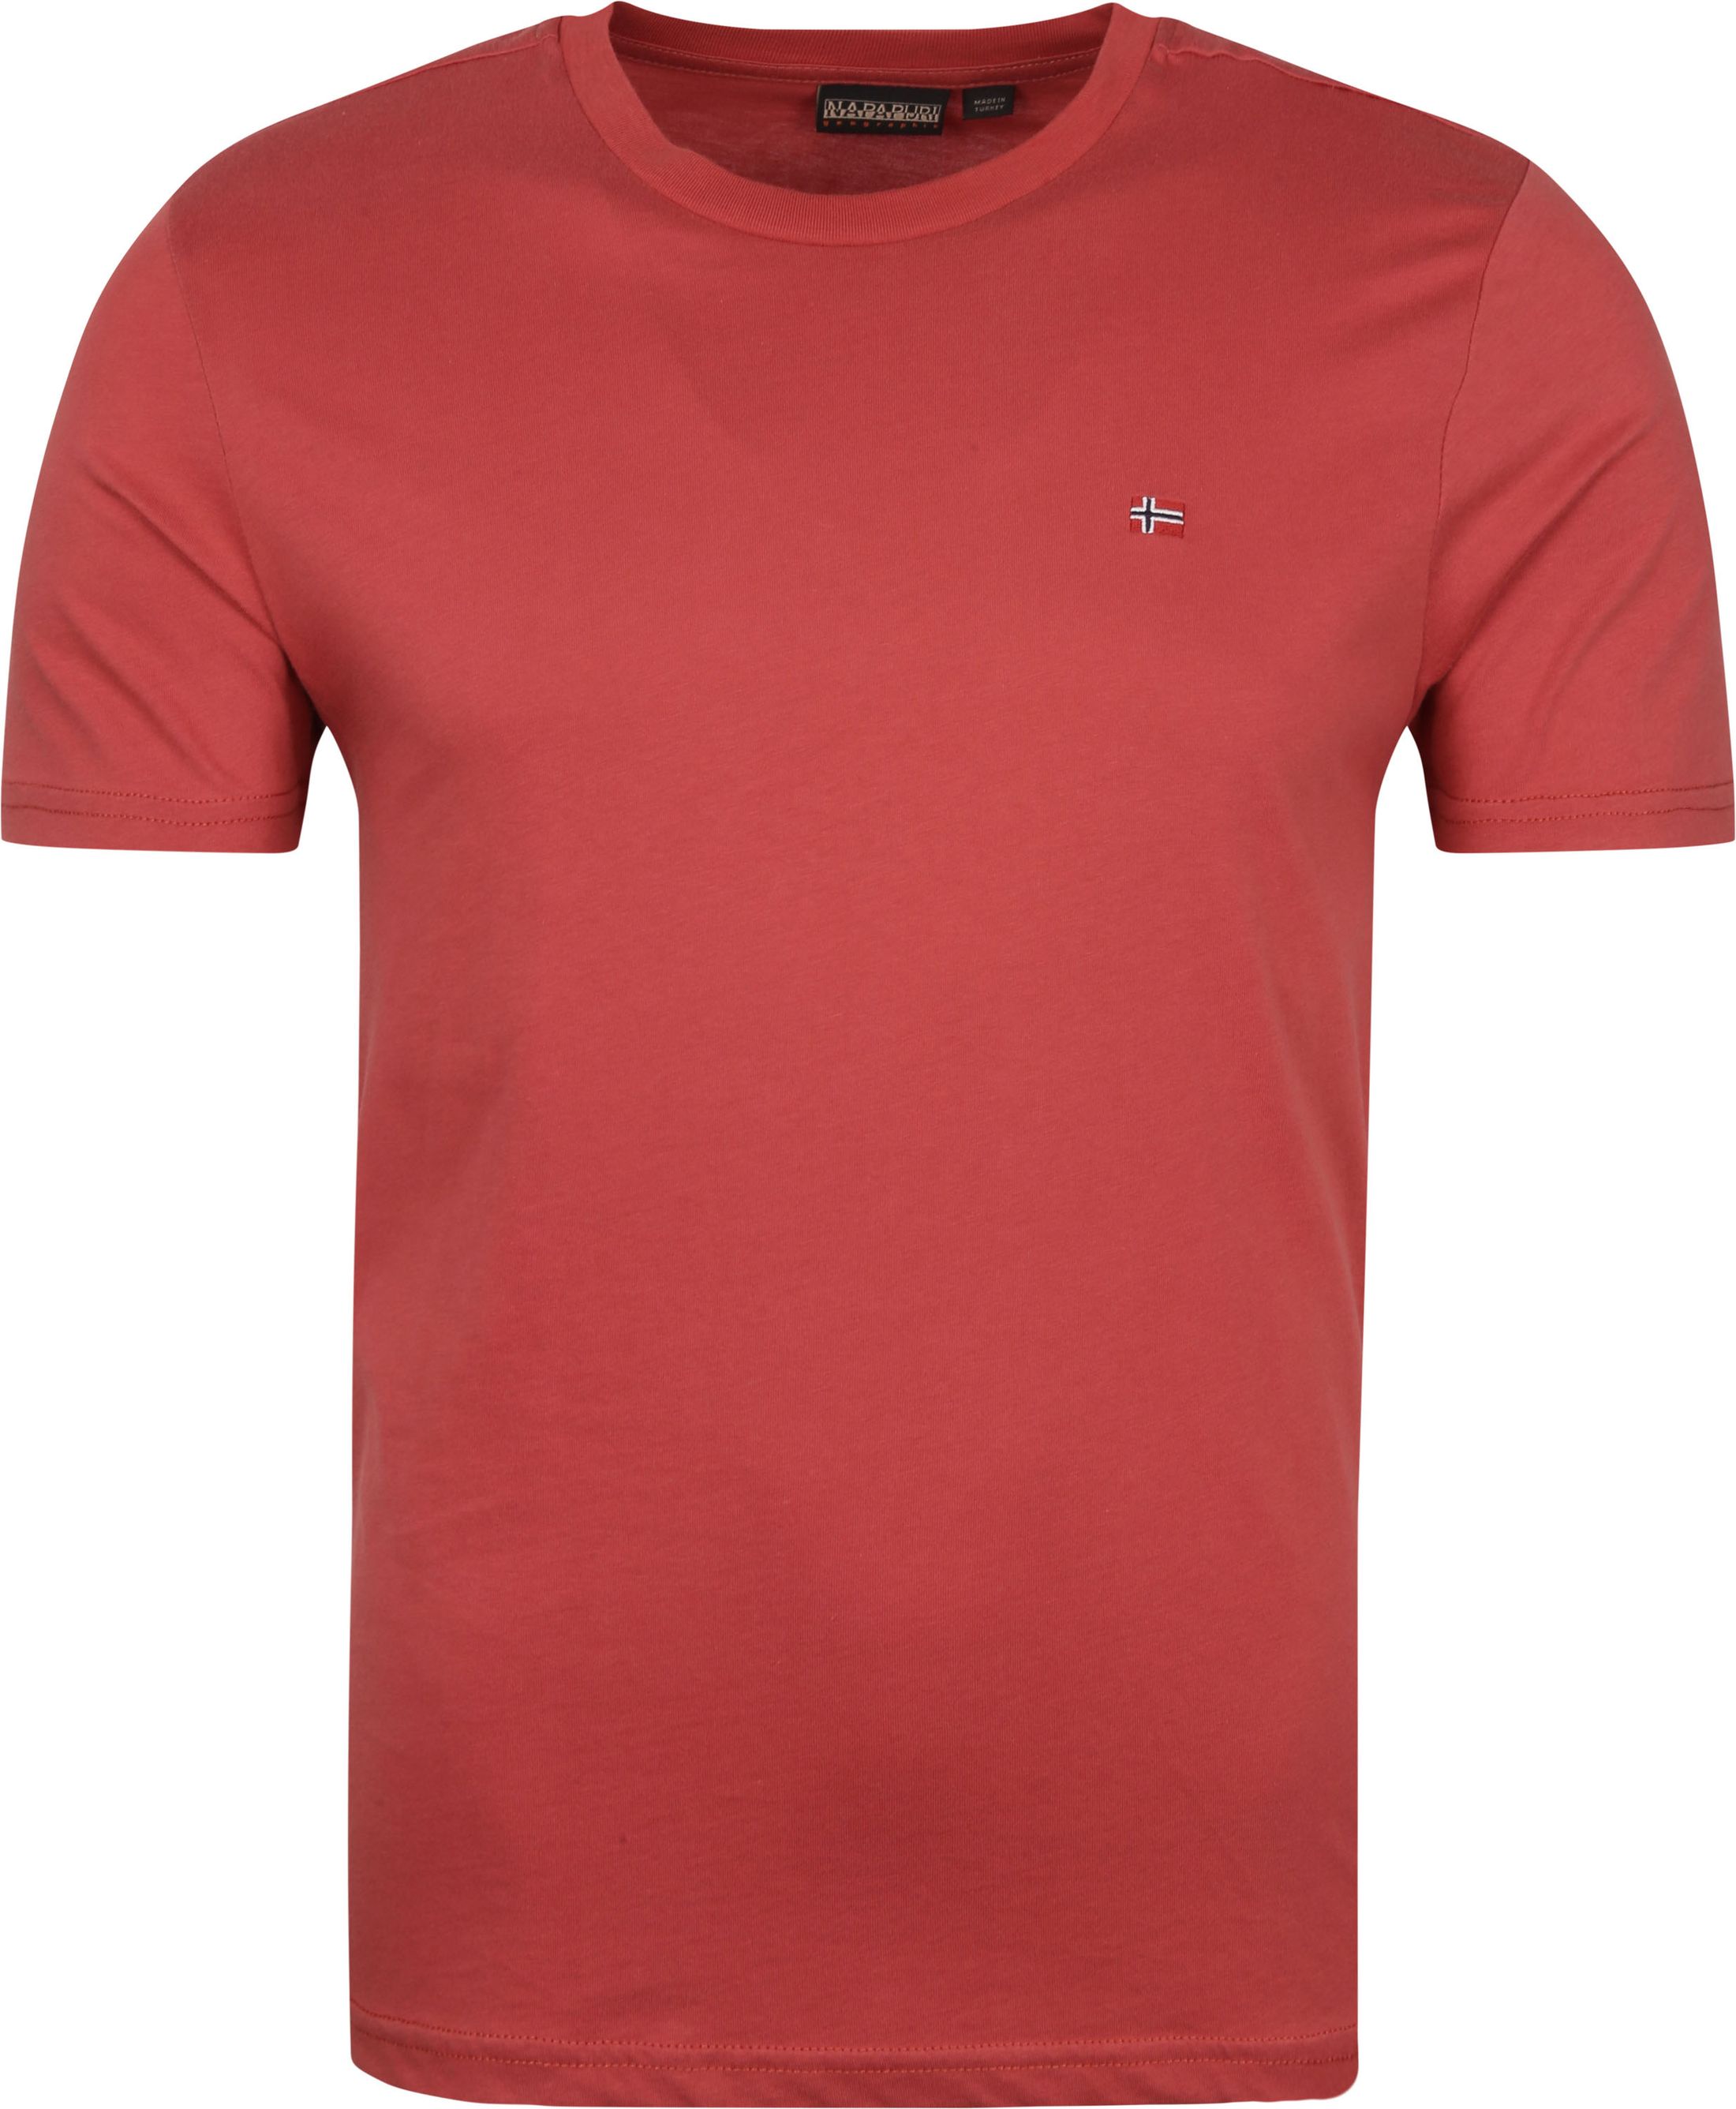 Napapijri Salis T-Shirt Red size 3XL